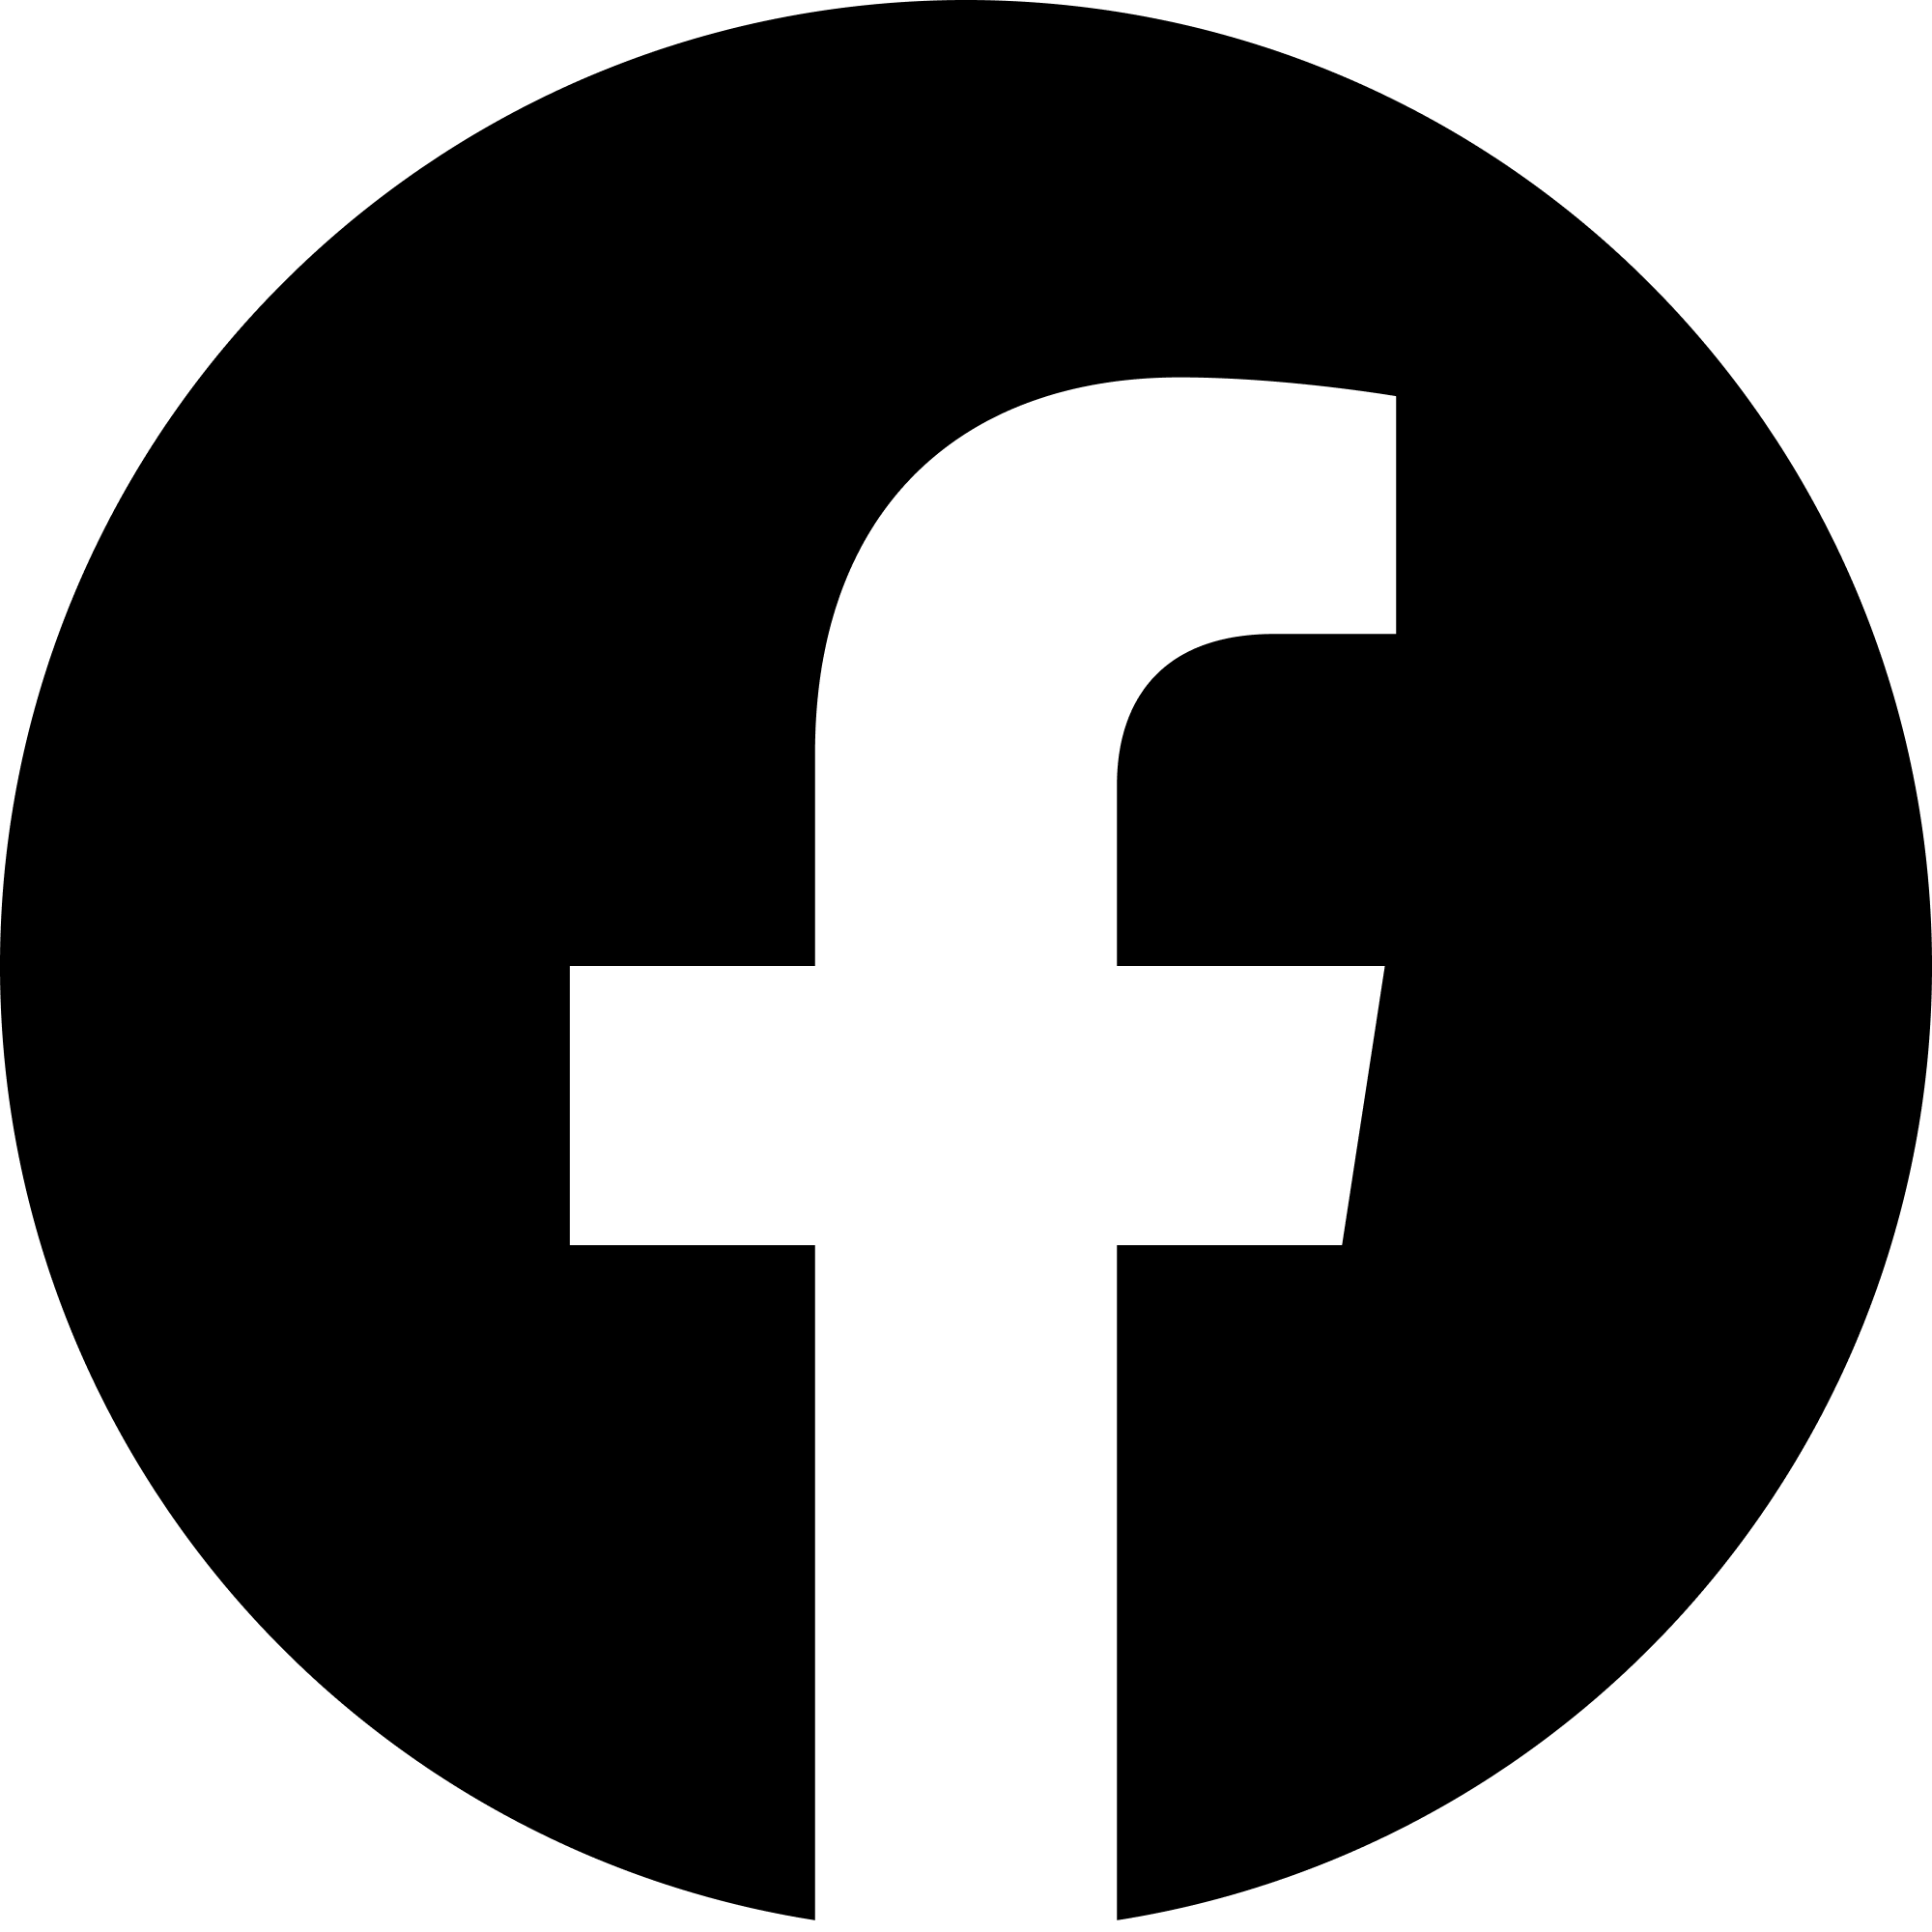 facebook logo black and white 2000